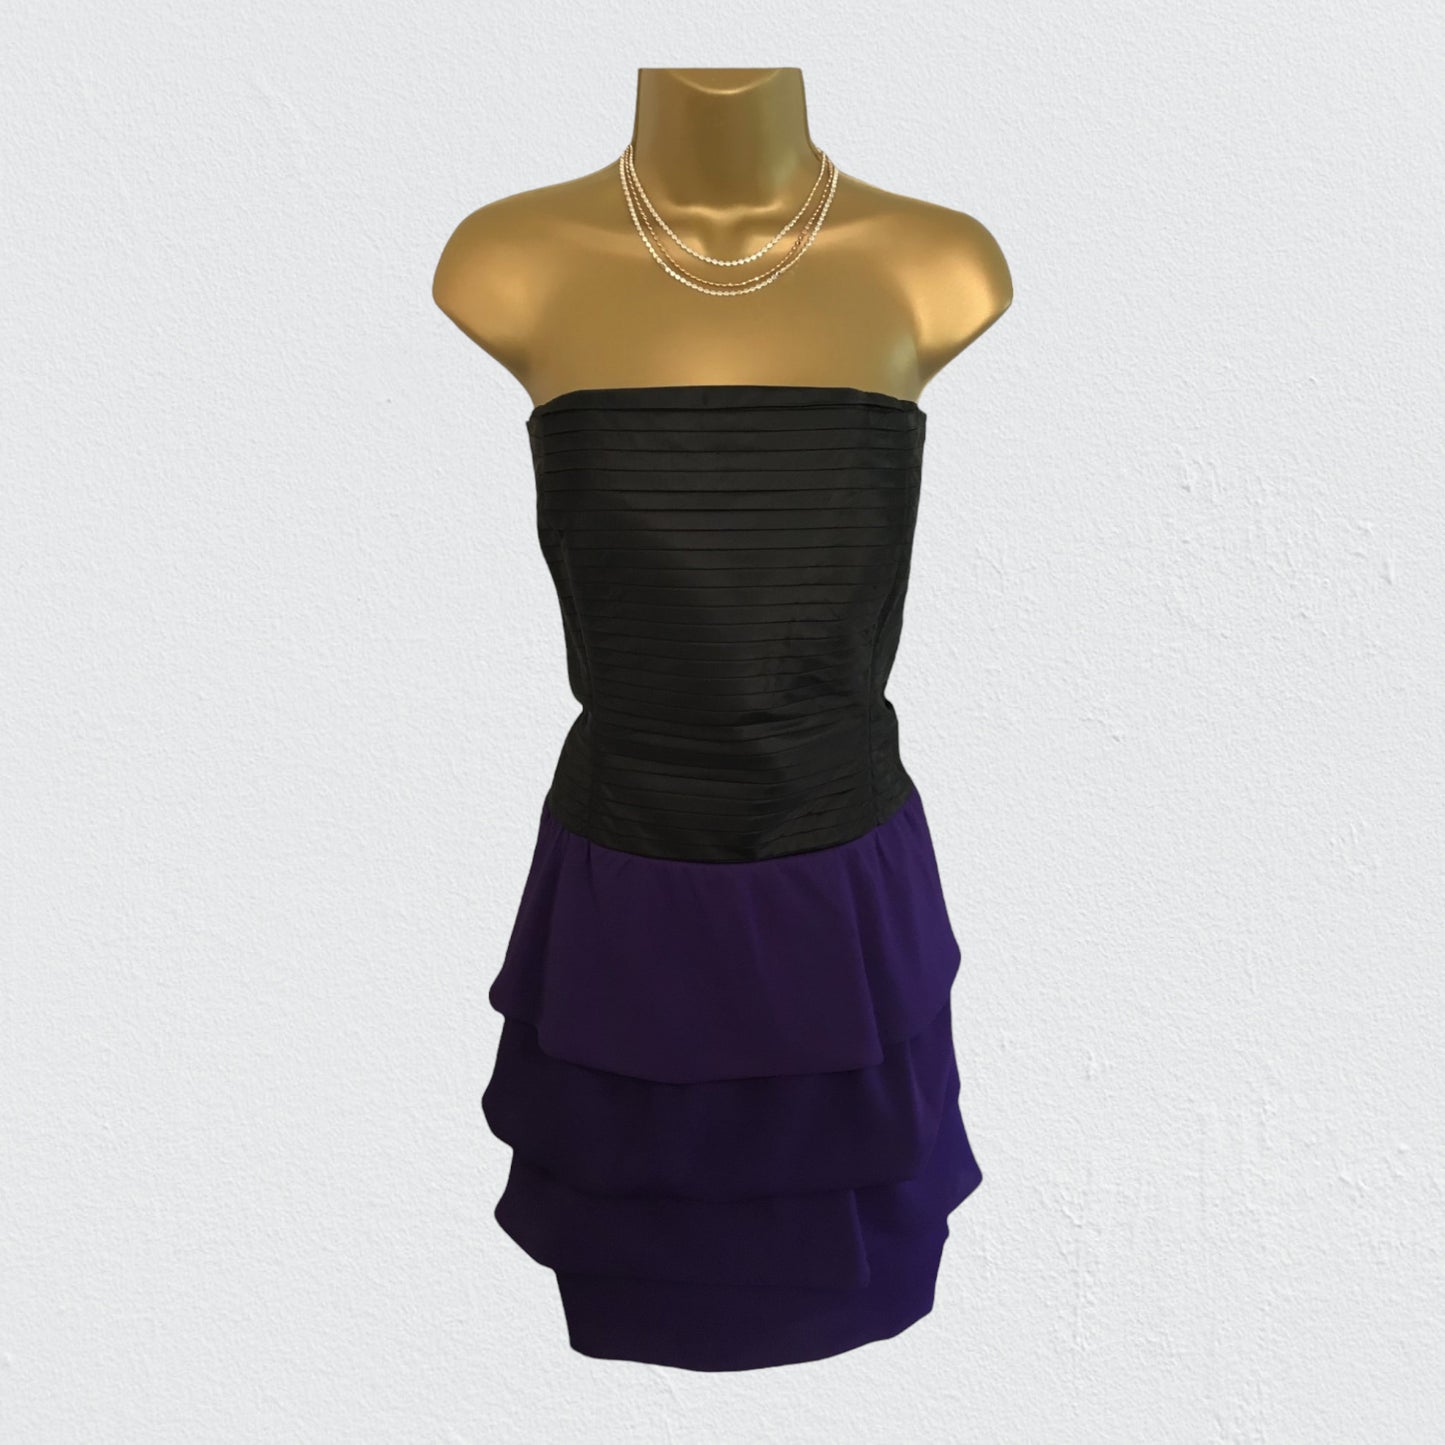 Reiss Women's Black & Purple Helga Evening Dress UK 8 US 4 EU 36 Timeless Fashions